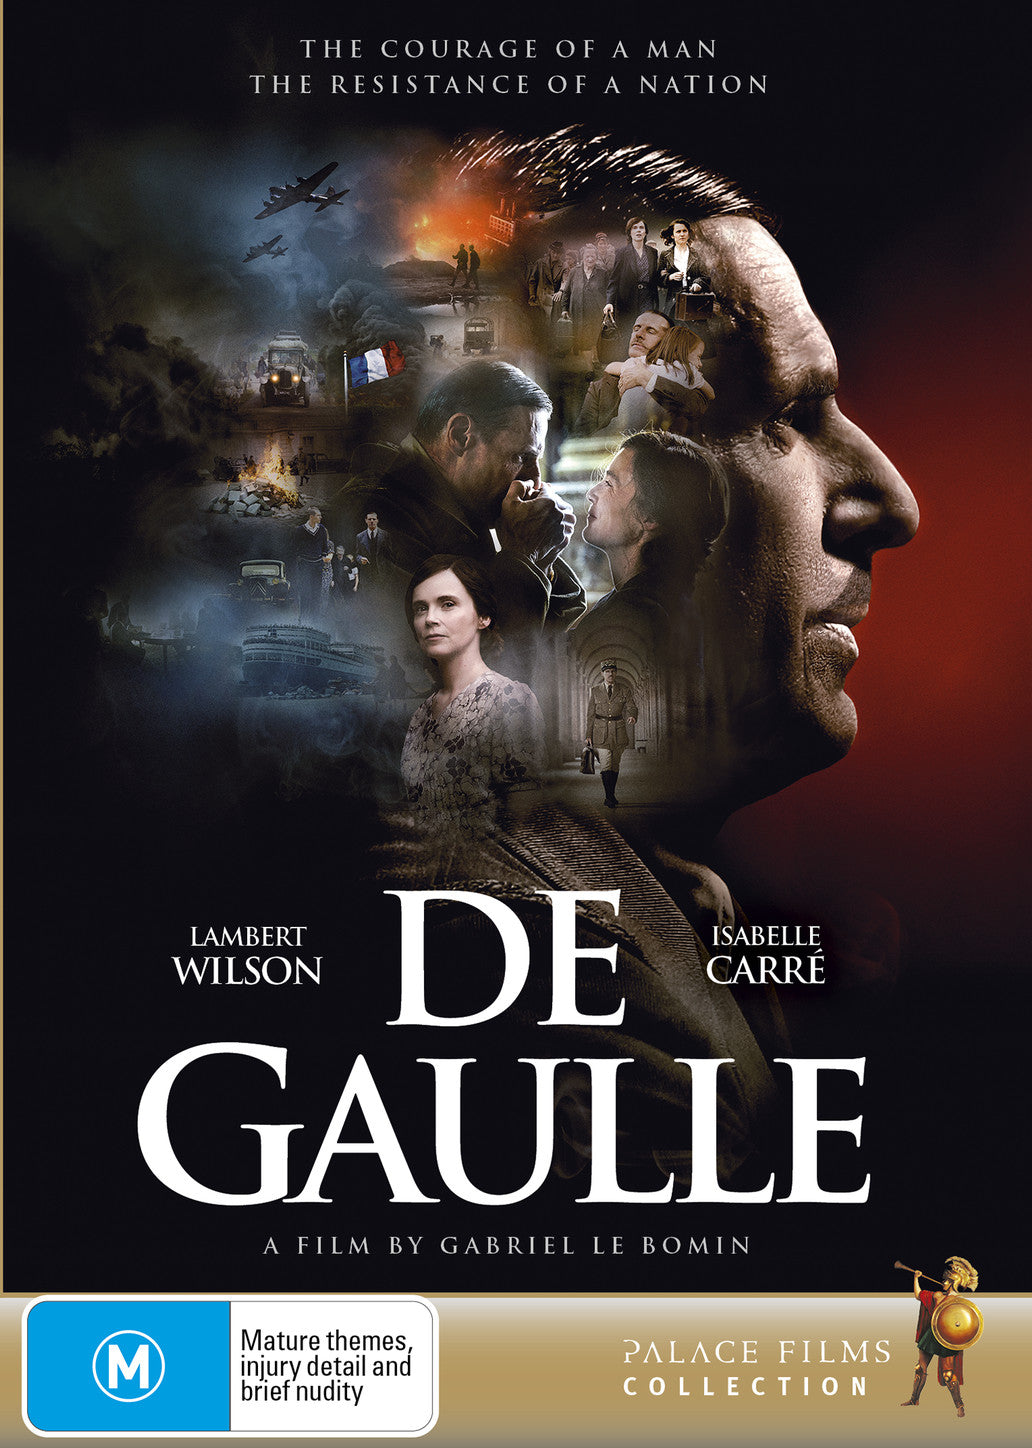 DE GAULLE